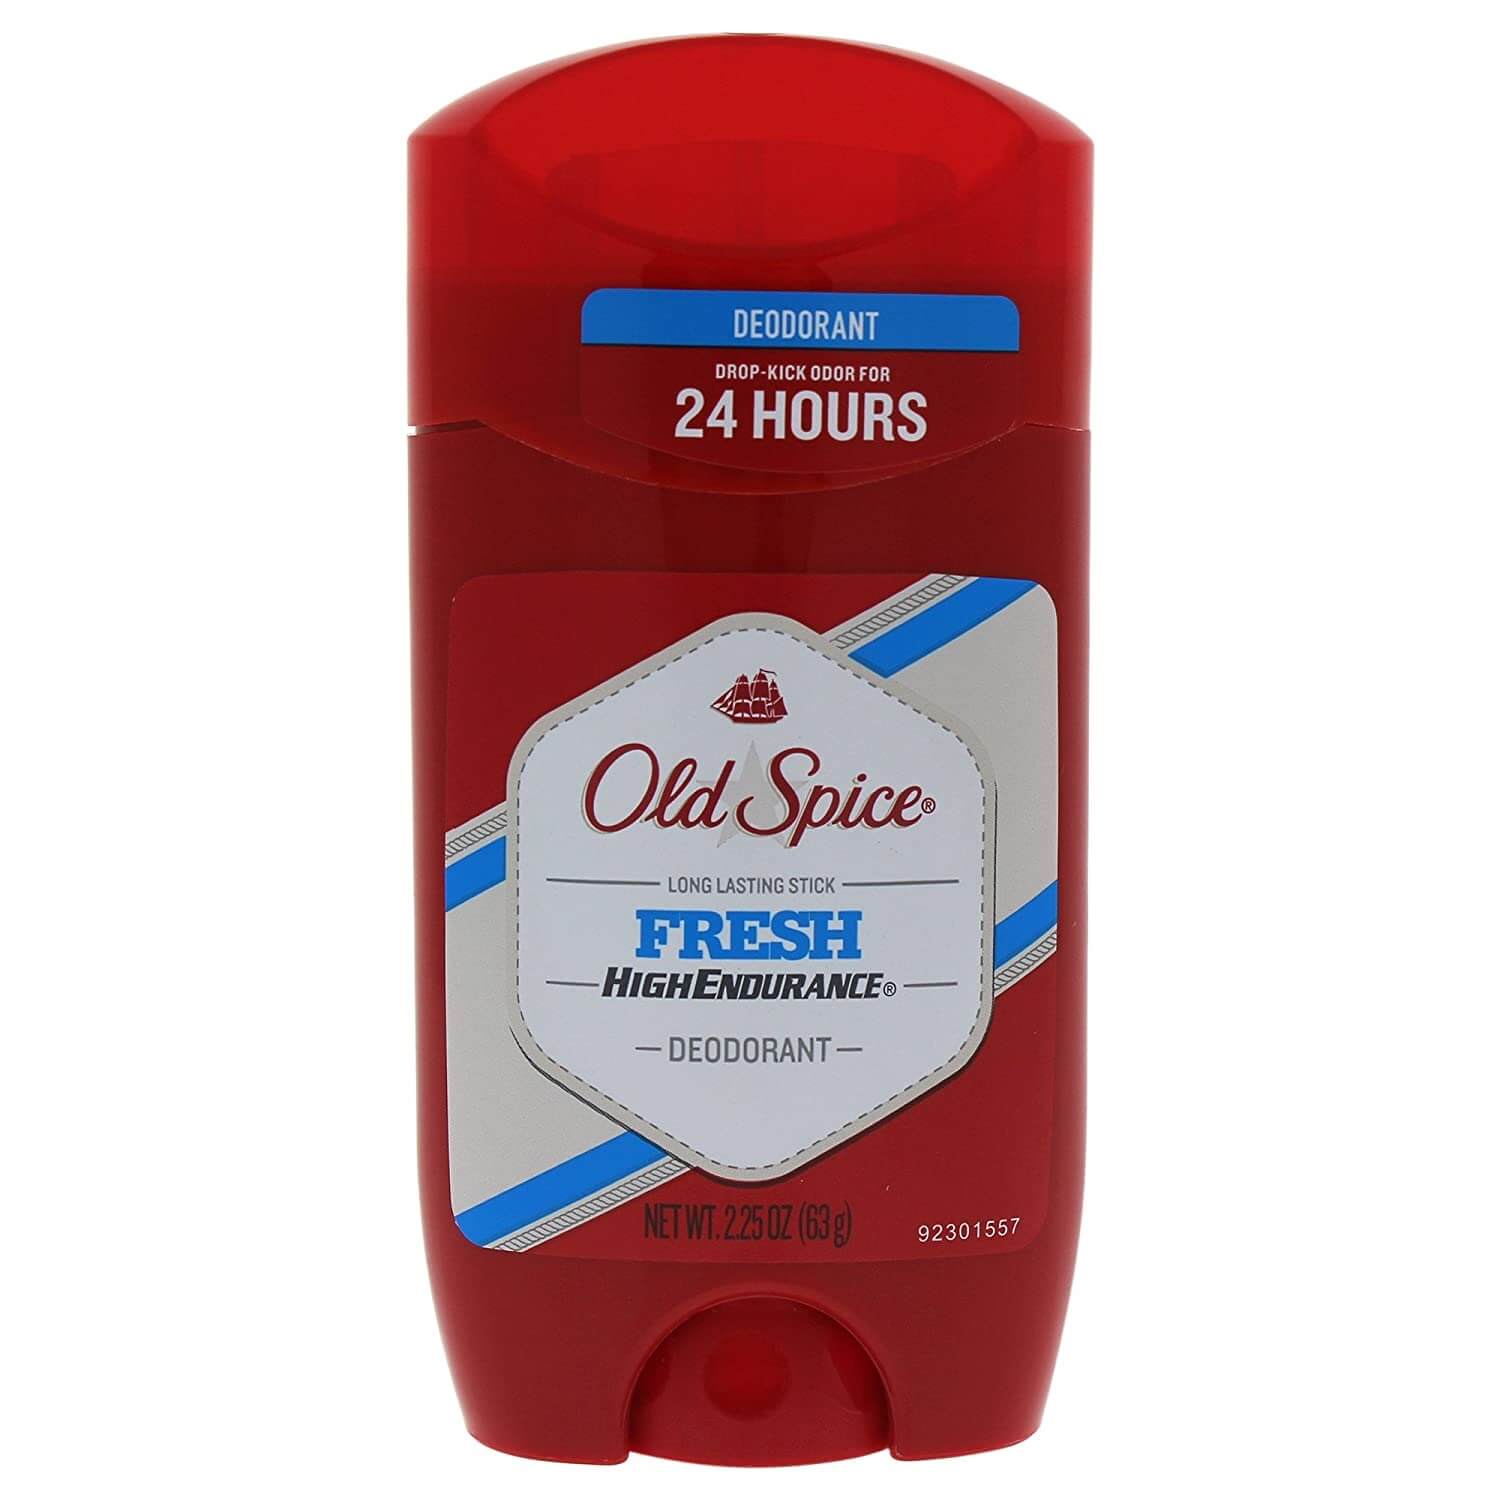 OLD SPICE Fresh High Endurance Long Lasting Deodorant Stick - For Men